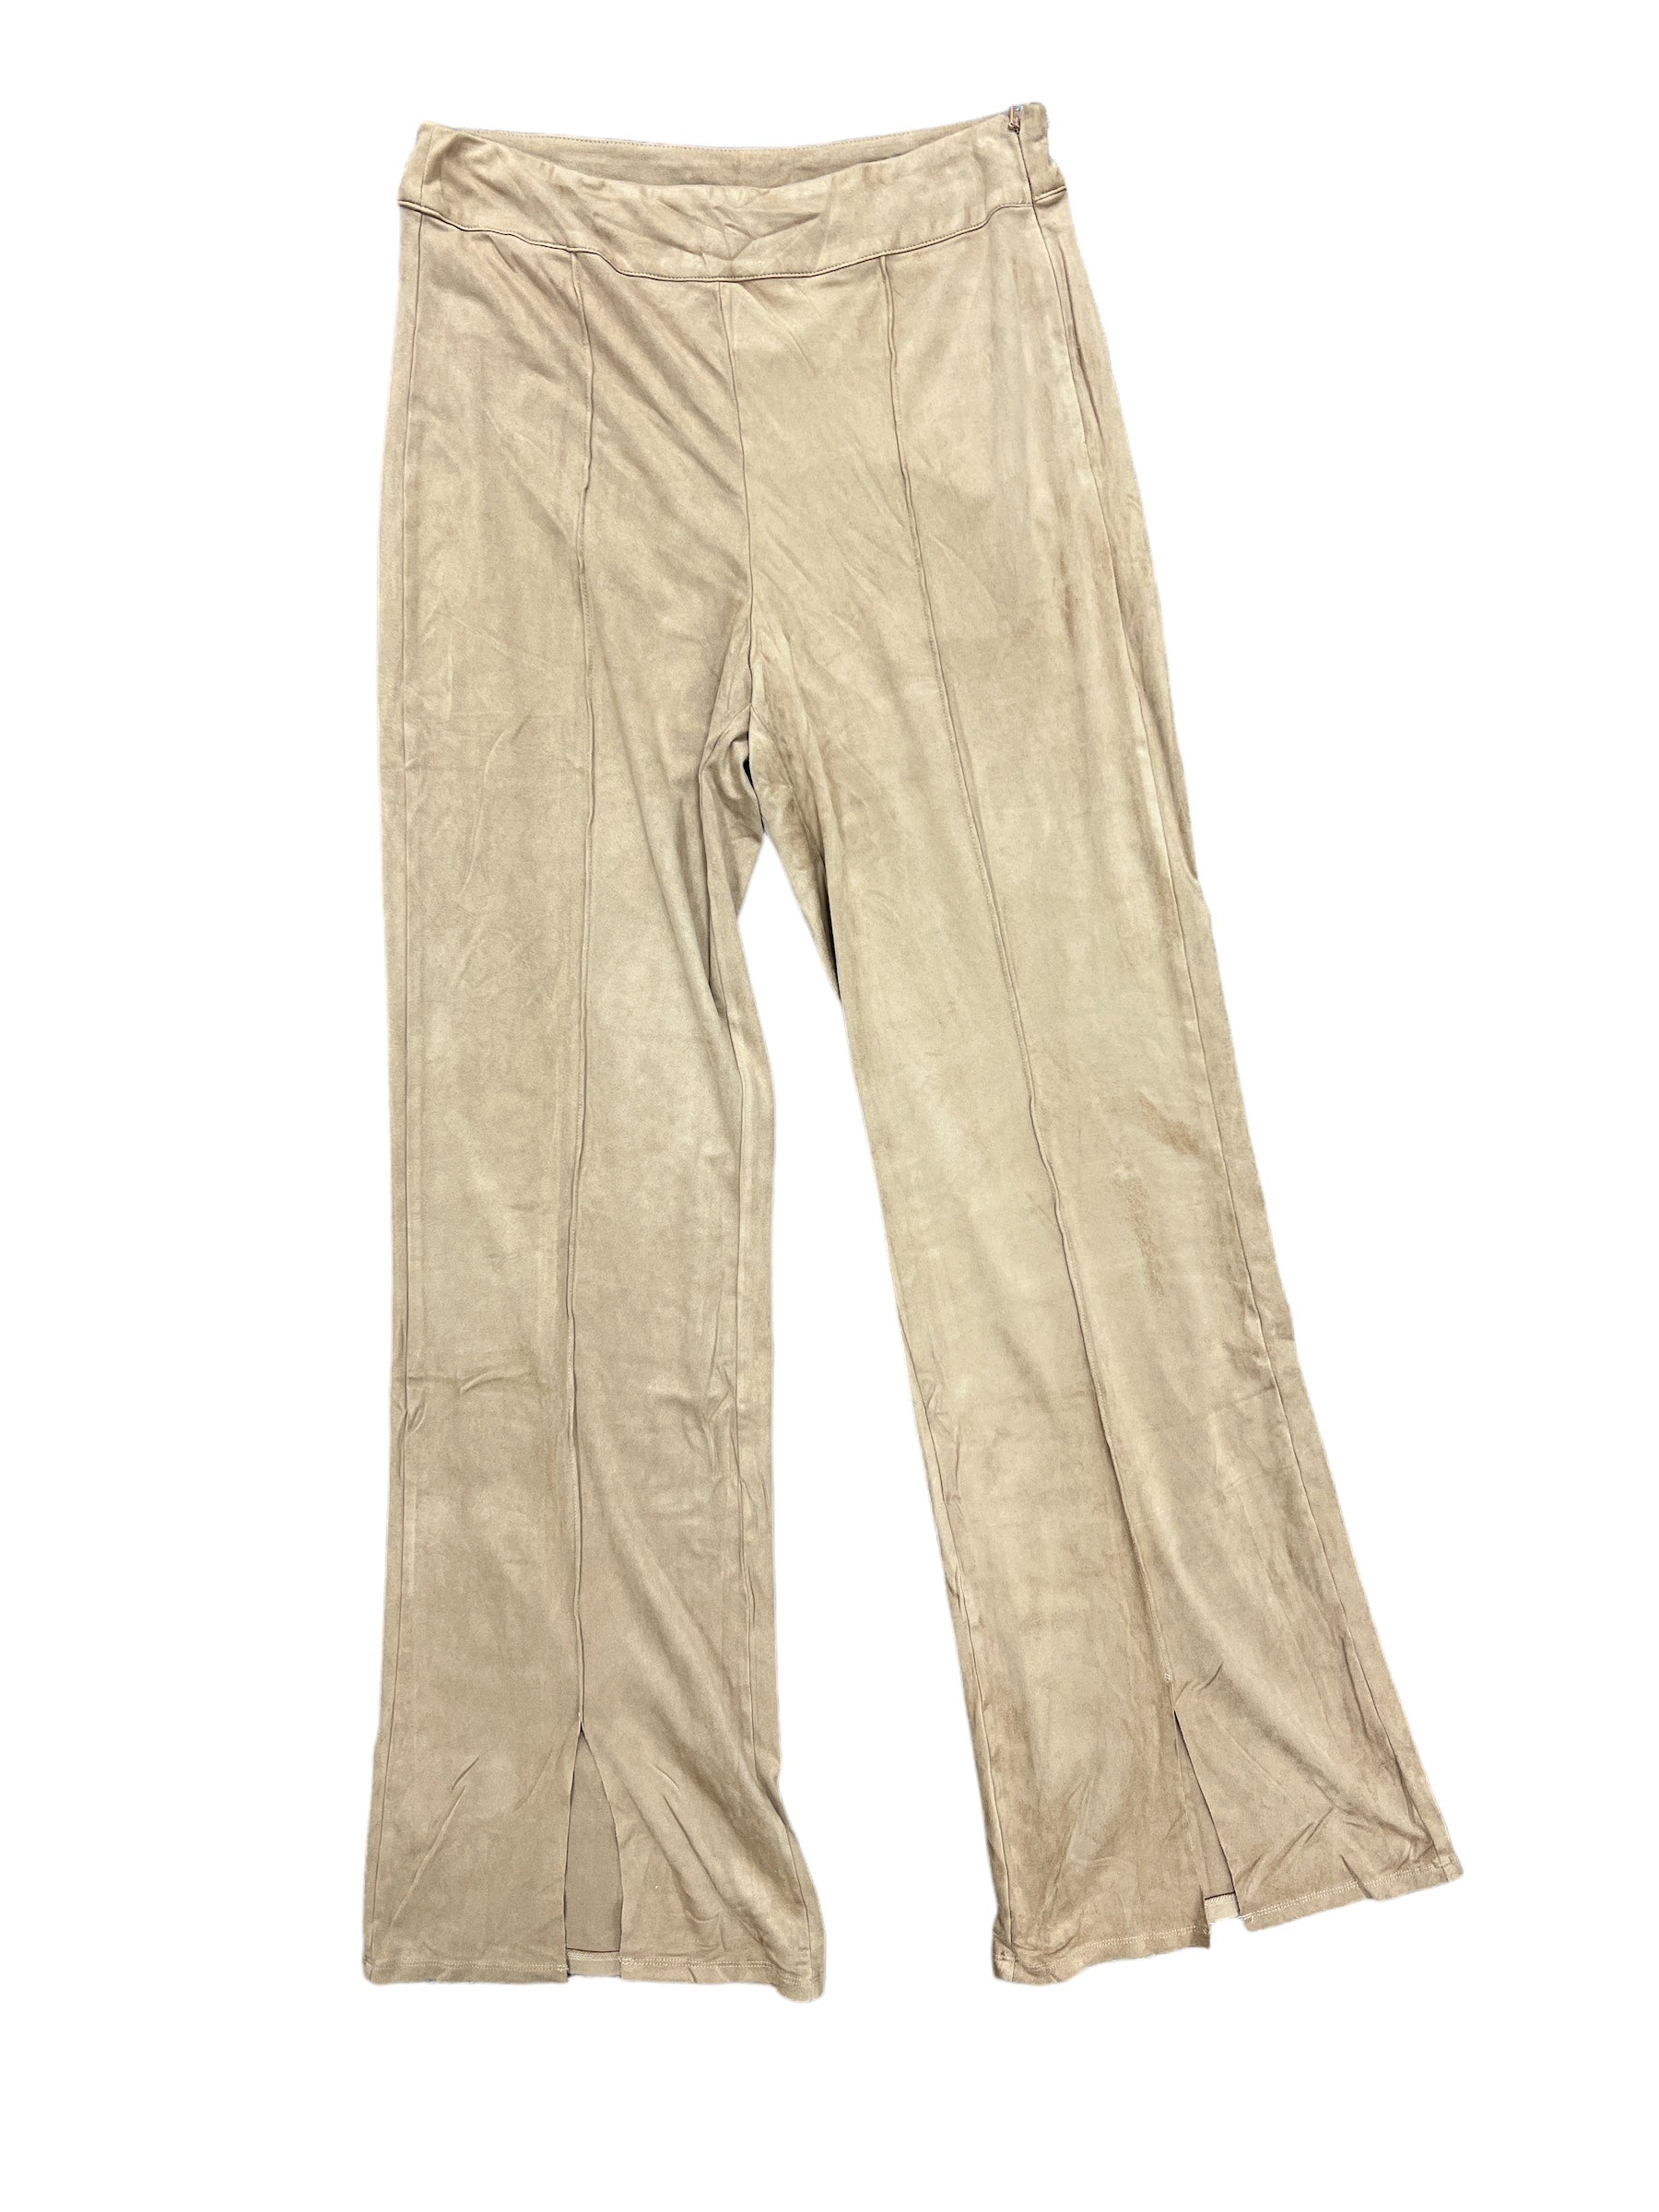 Fallon Pant-230 Pants-Simply Stylish Boutique-Simply Stylish Boutique | Women’s & Kid’s Fashion | Paducah, KY